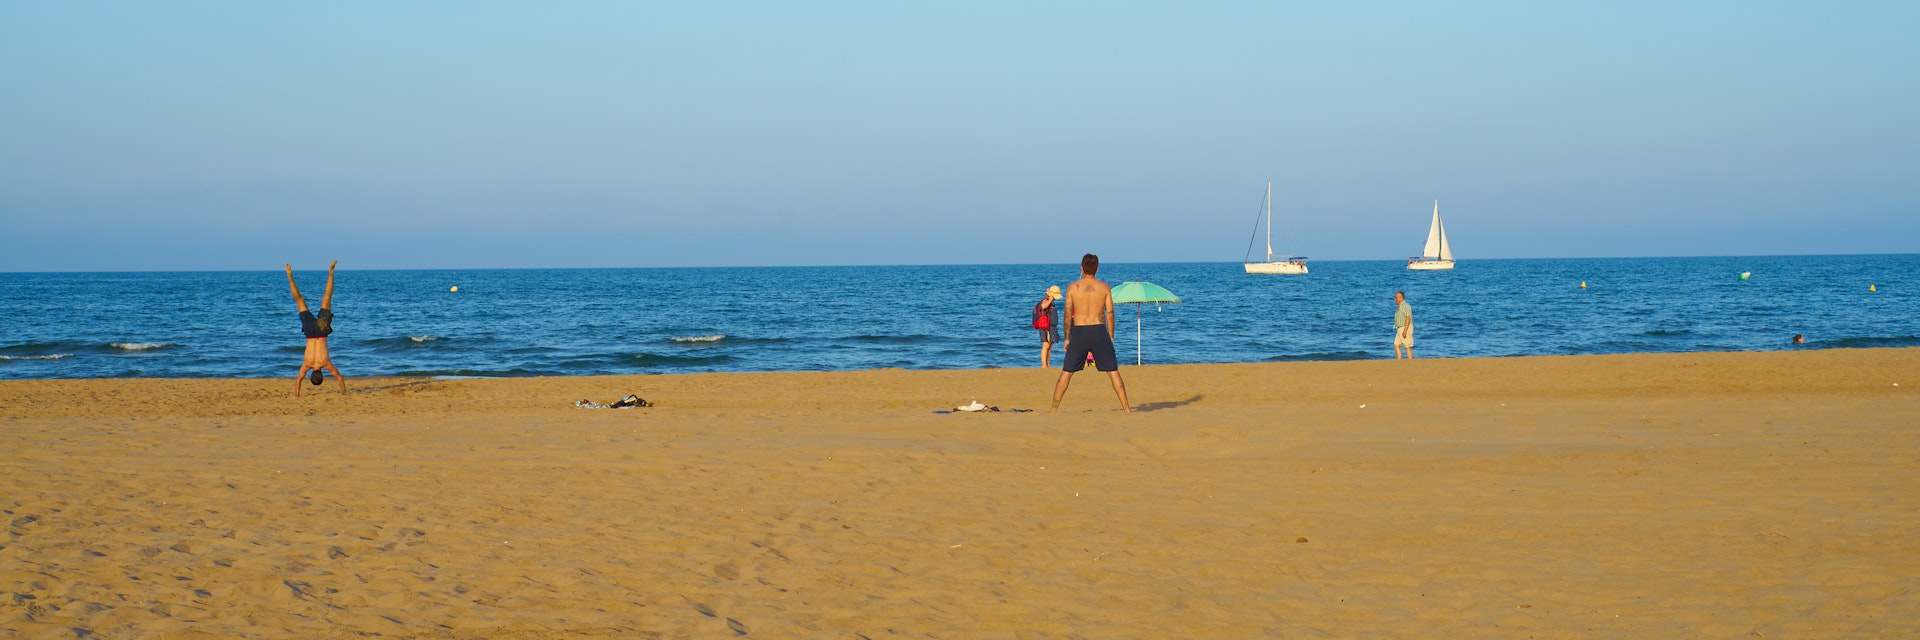 Beach of the Patacona de Alboraya in summer, Valencia, Spain.